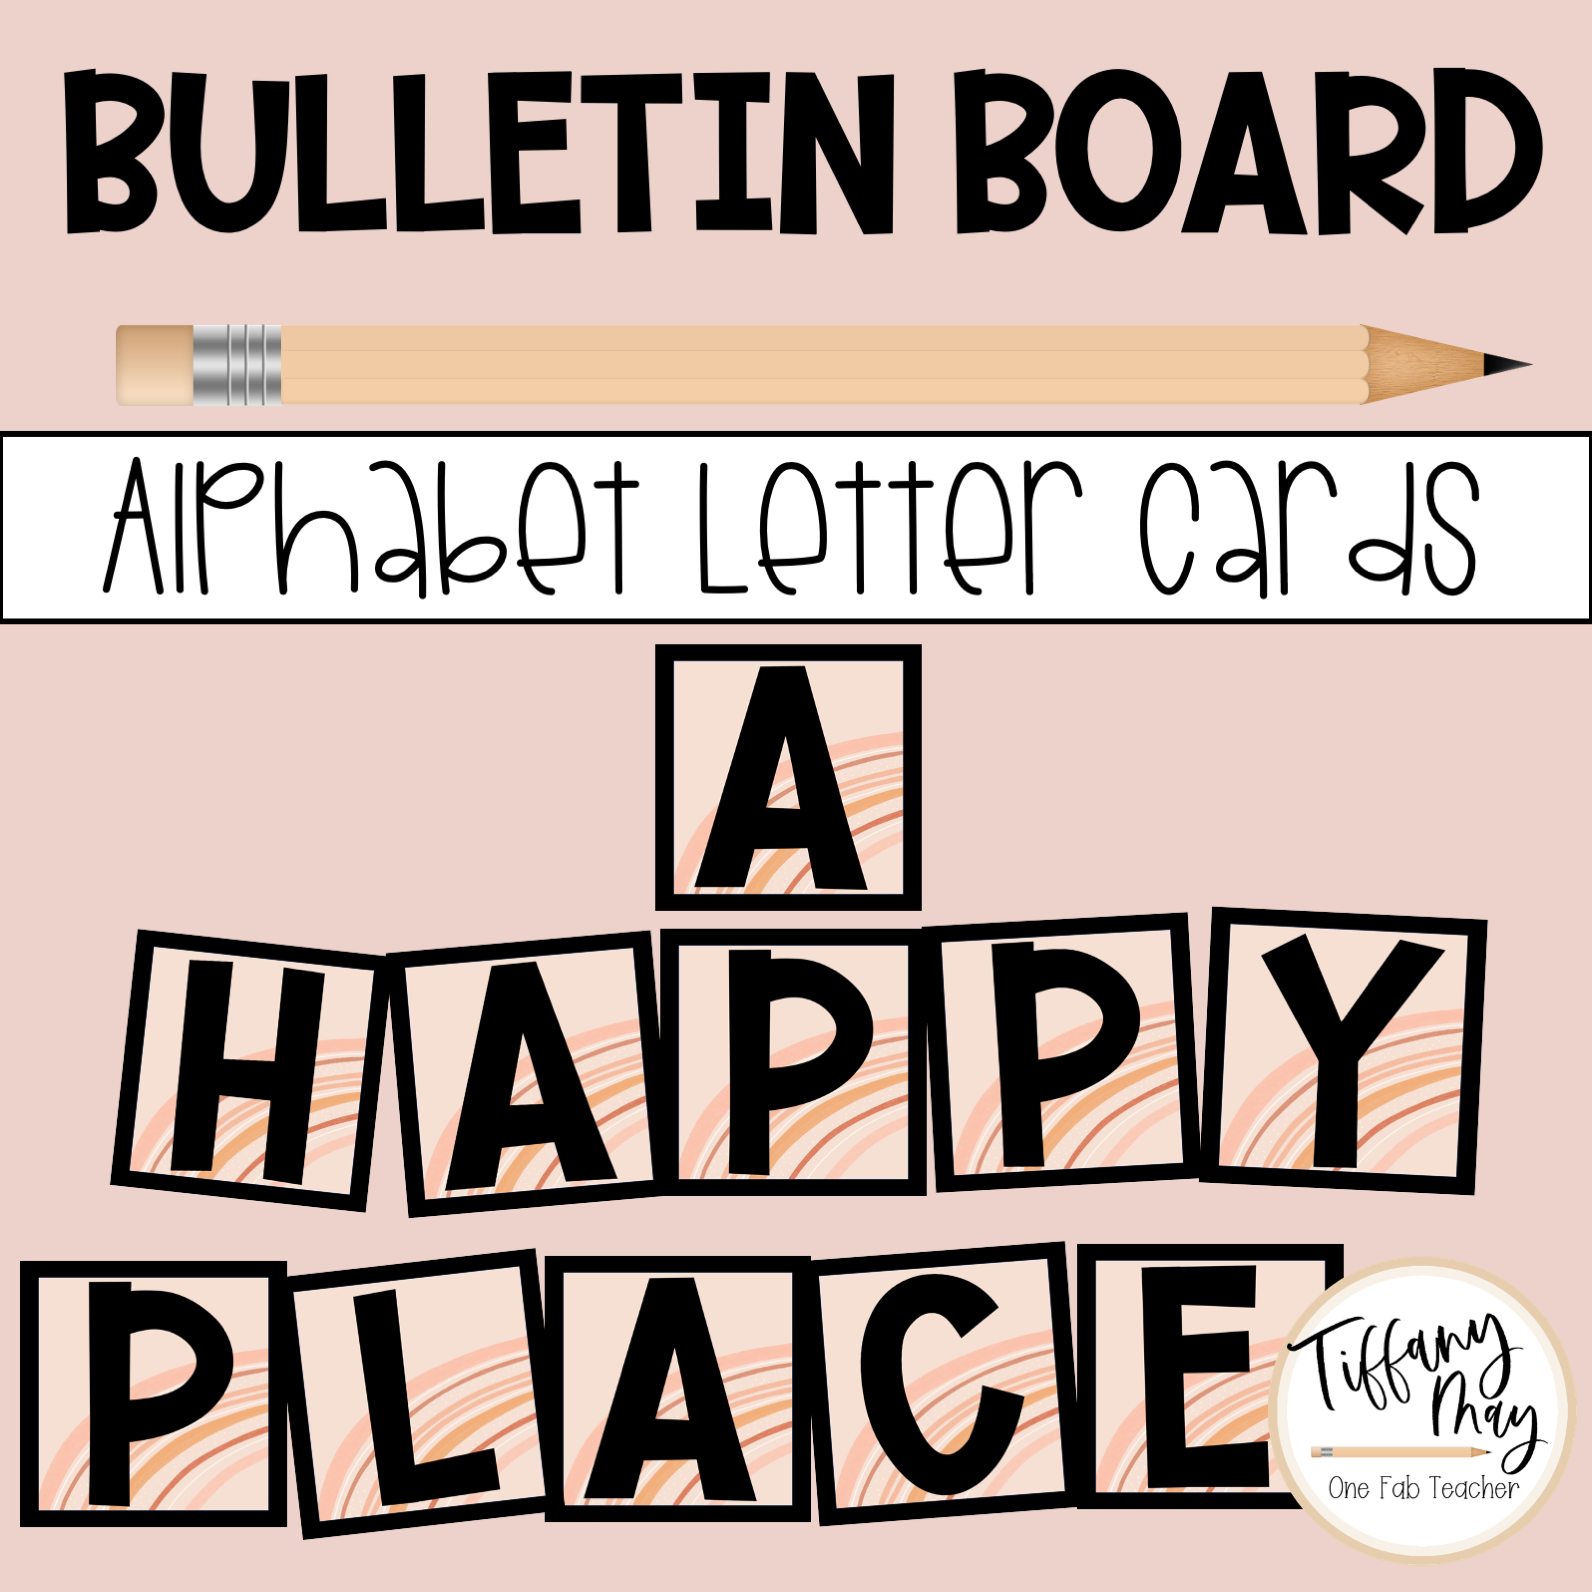 Printable Bulletin Board Letters